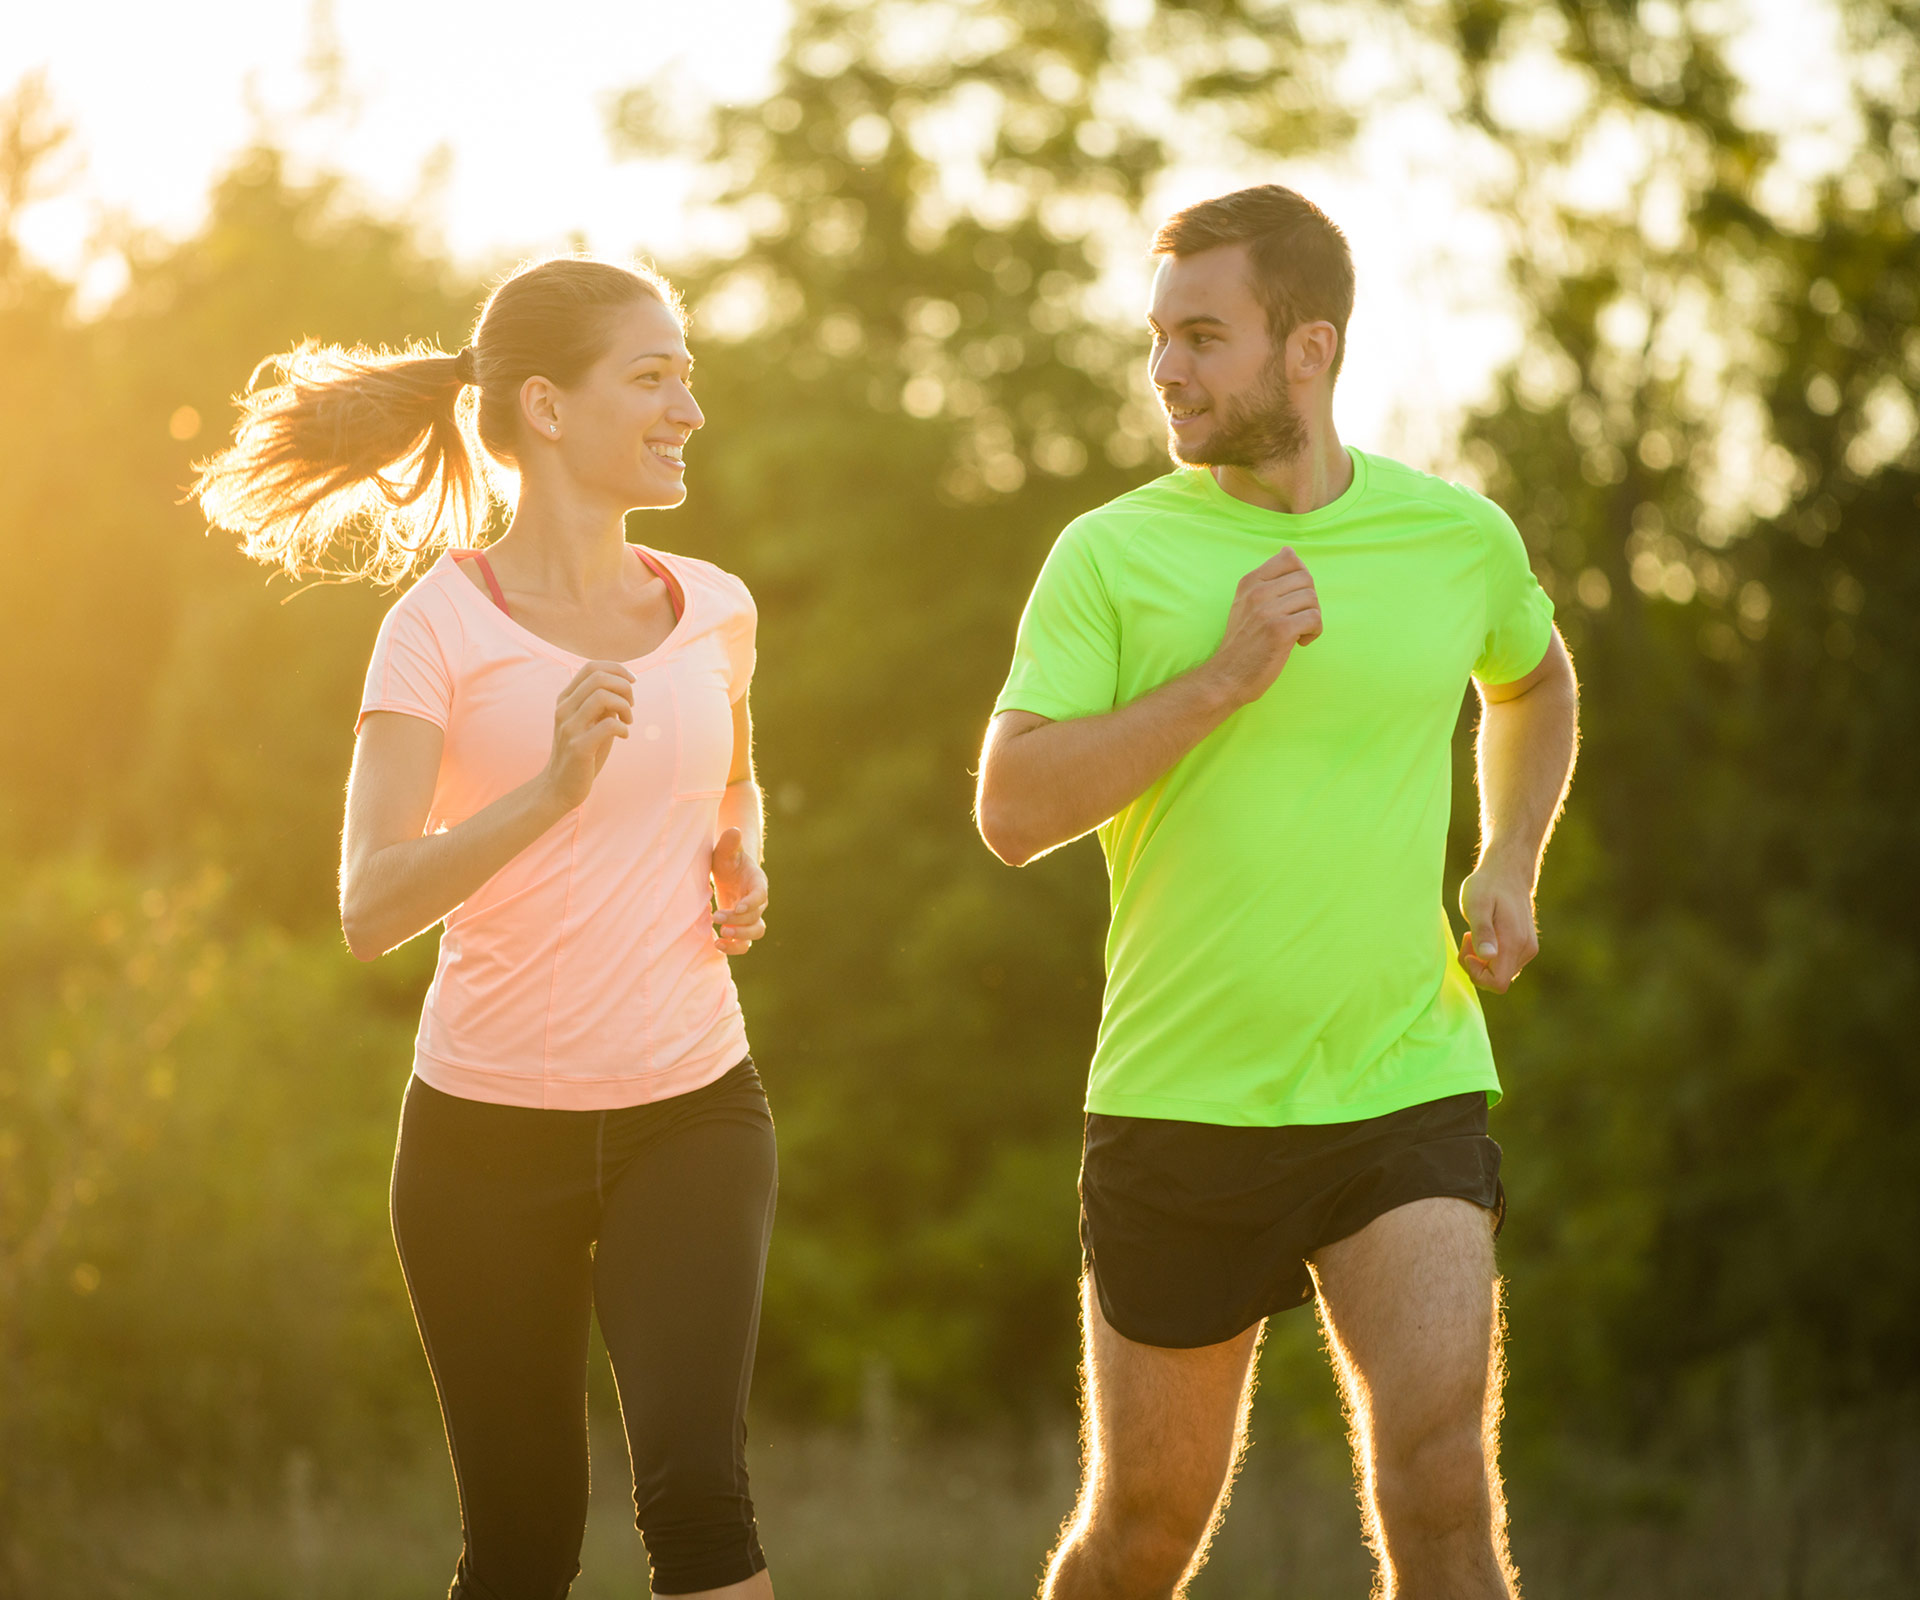 Male vs female, running, athletics, health